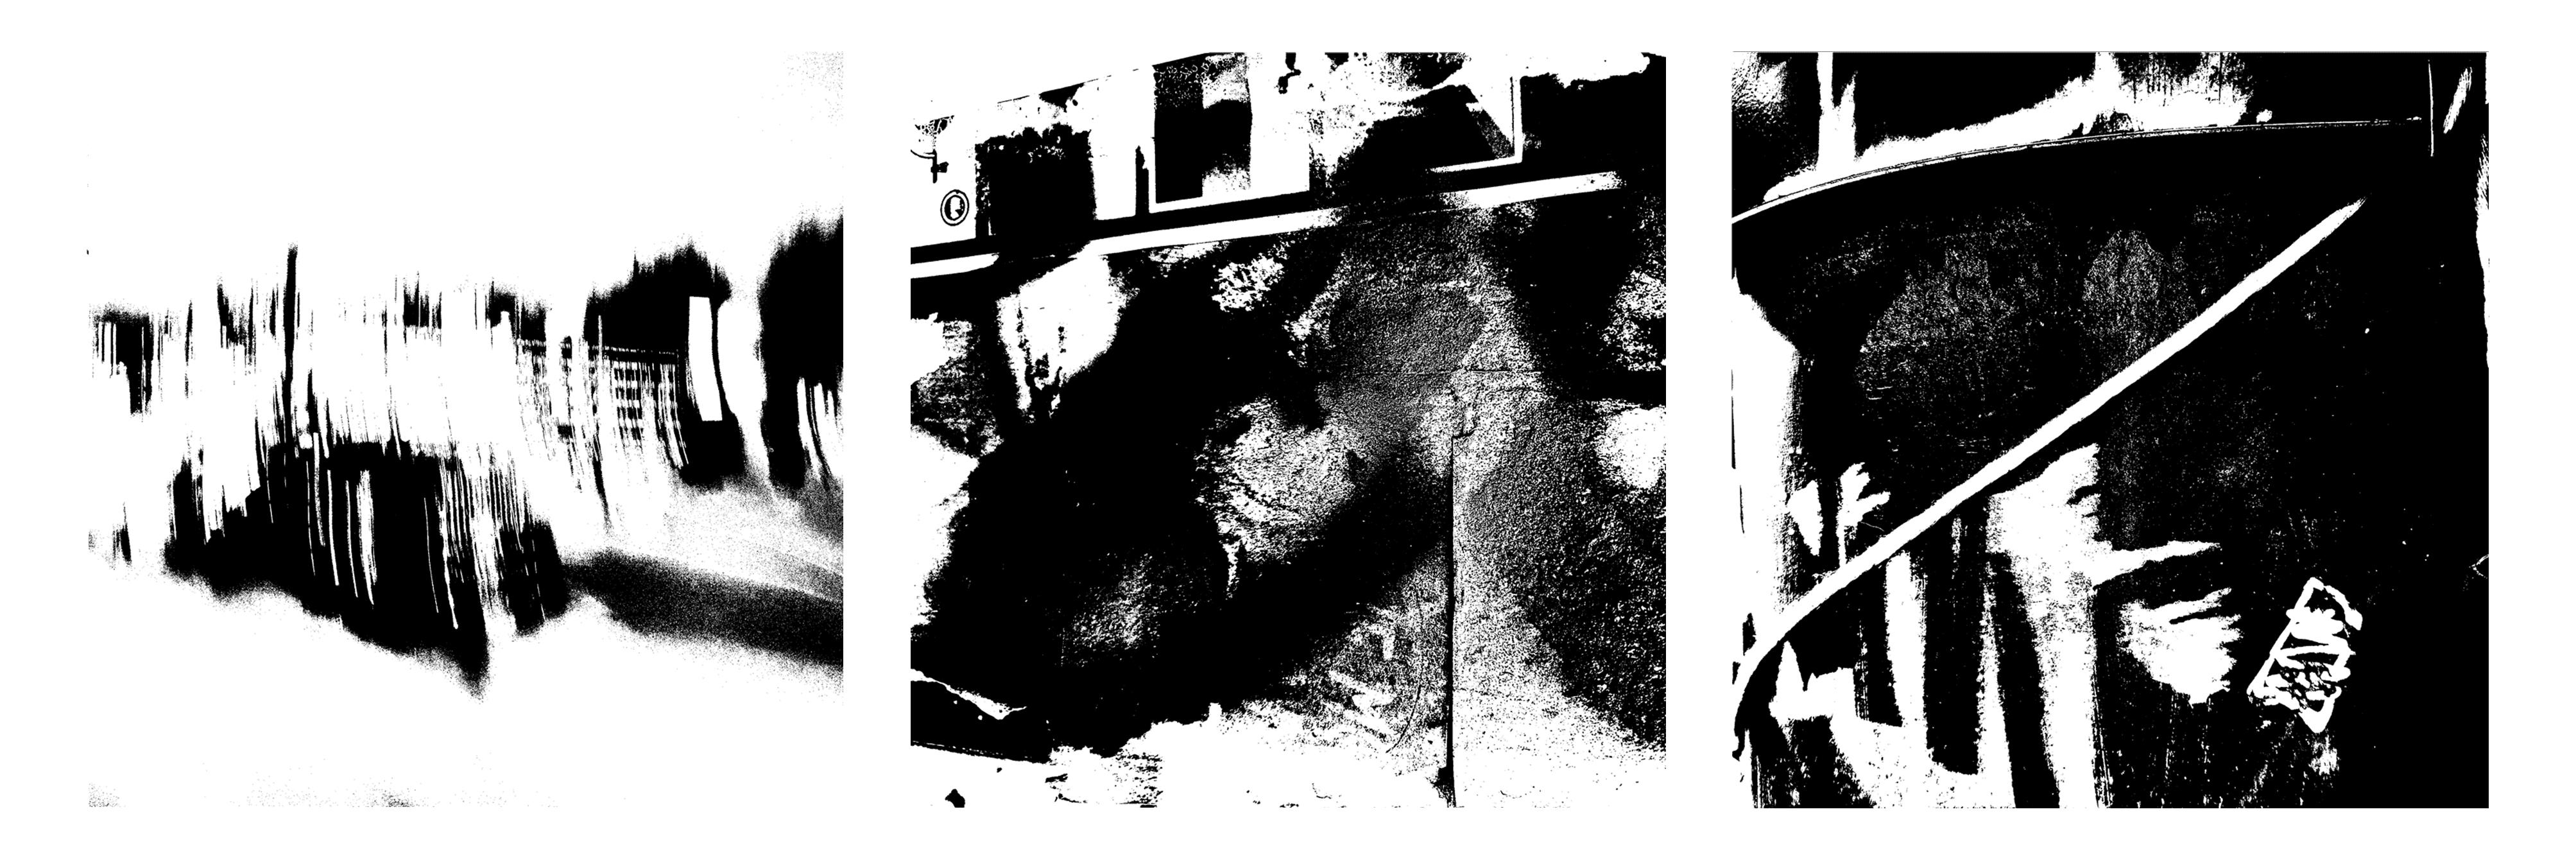 Chris MaGee Abstract Photograph – "Shadows Kept Alive No.25", signierter und nummerierter Giclée-Druck, Hahnemühle-Papier